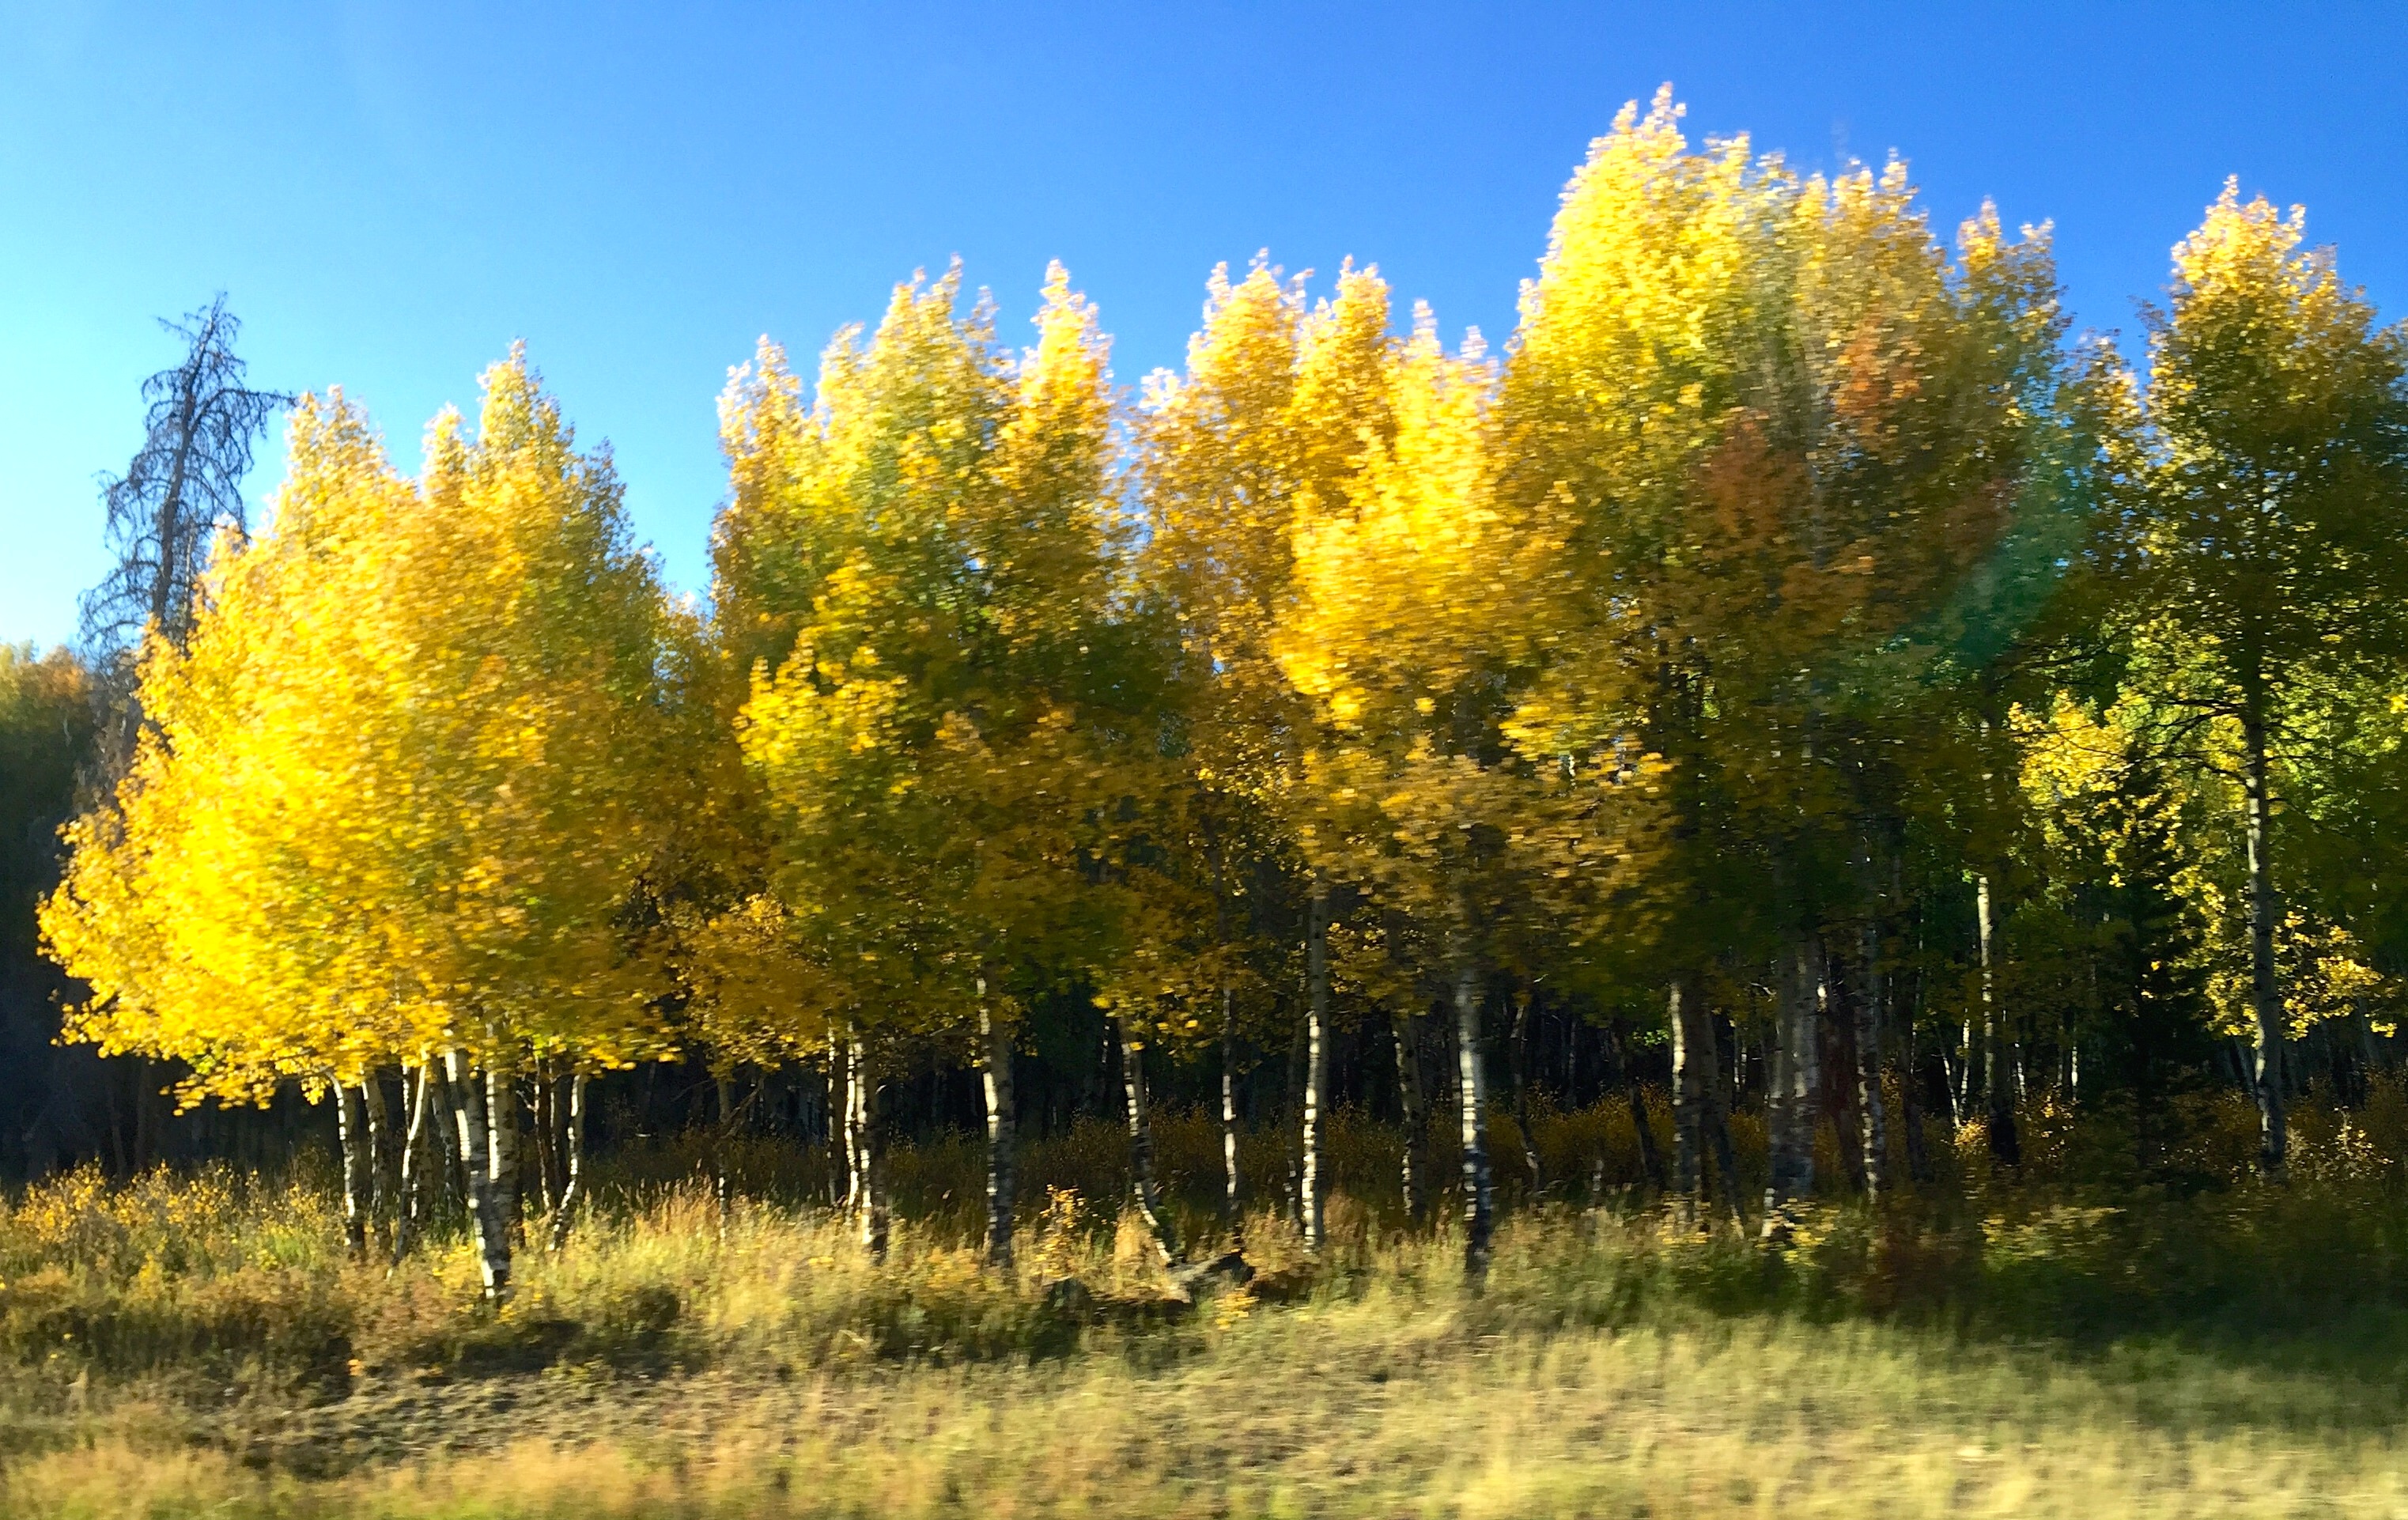 Aspen trees in their golden glory